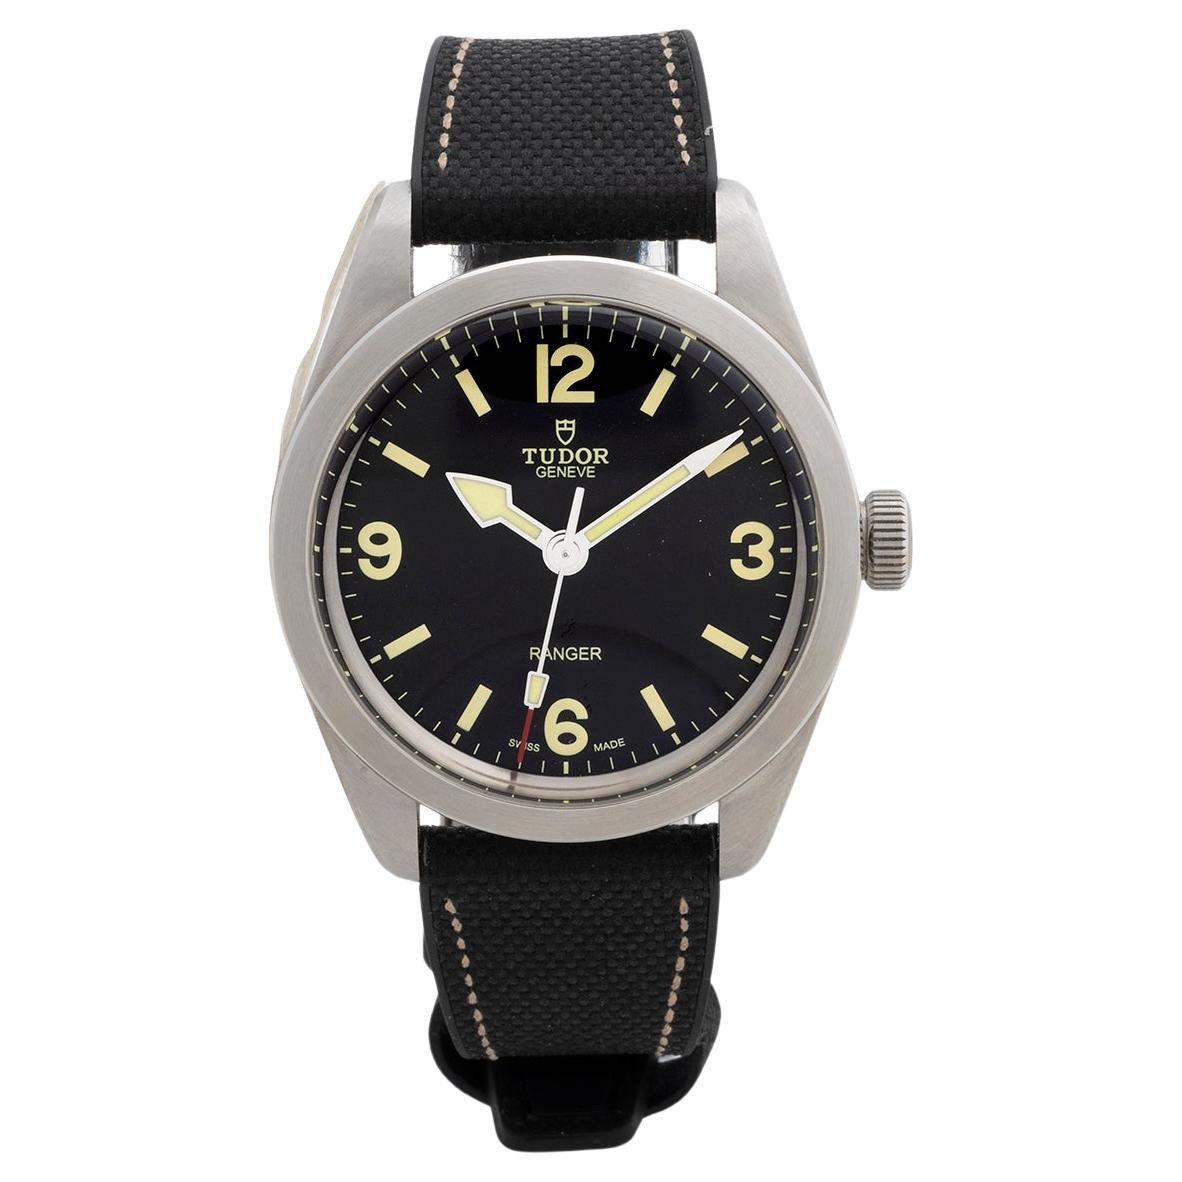 Tudor Ranger Wristwatch Ref 79950, 39mm Case, Near New Condition. For Sale